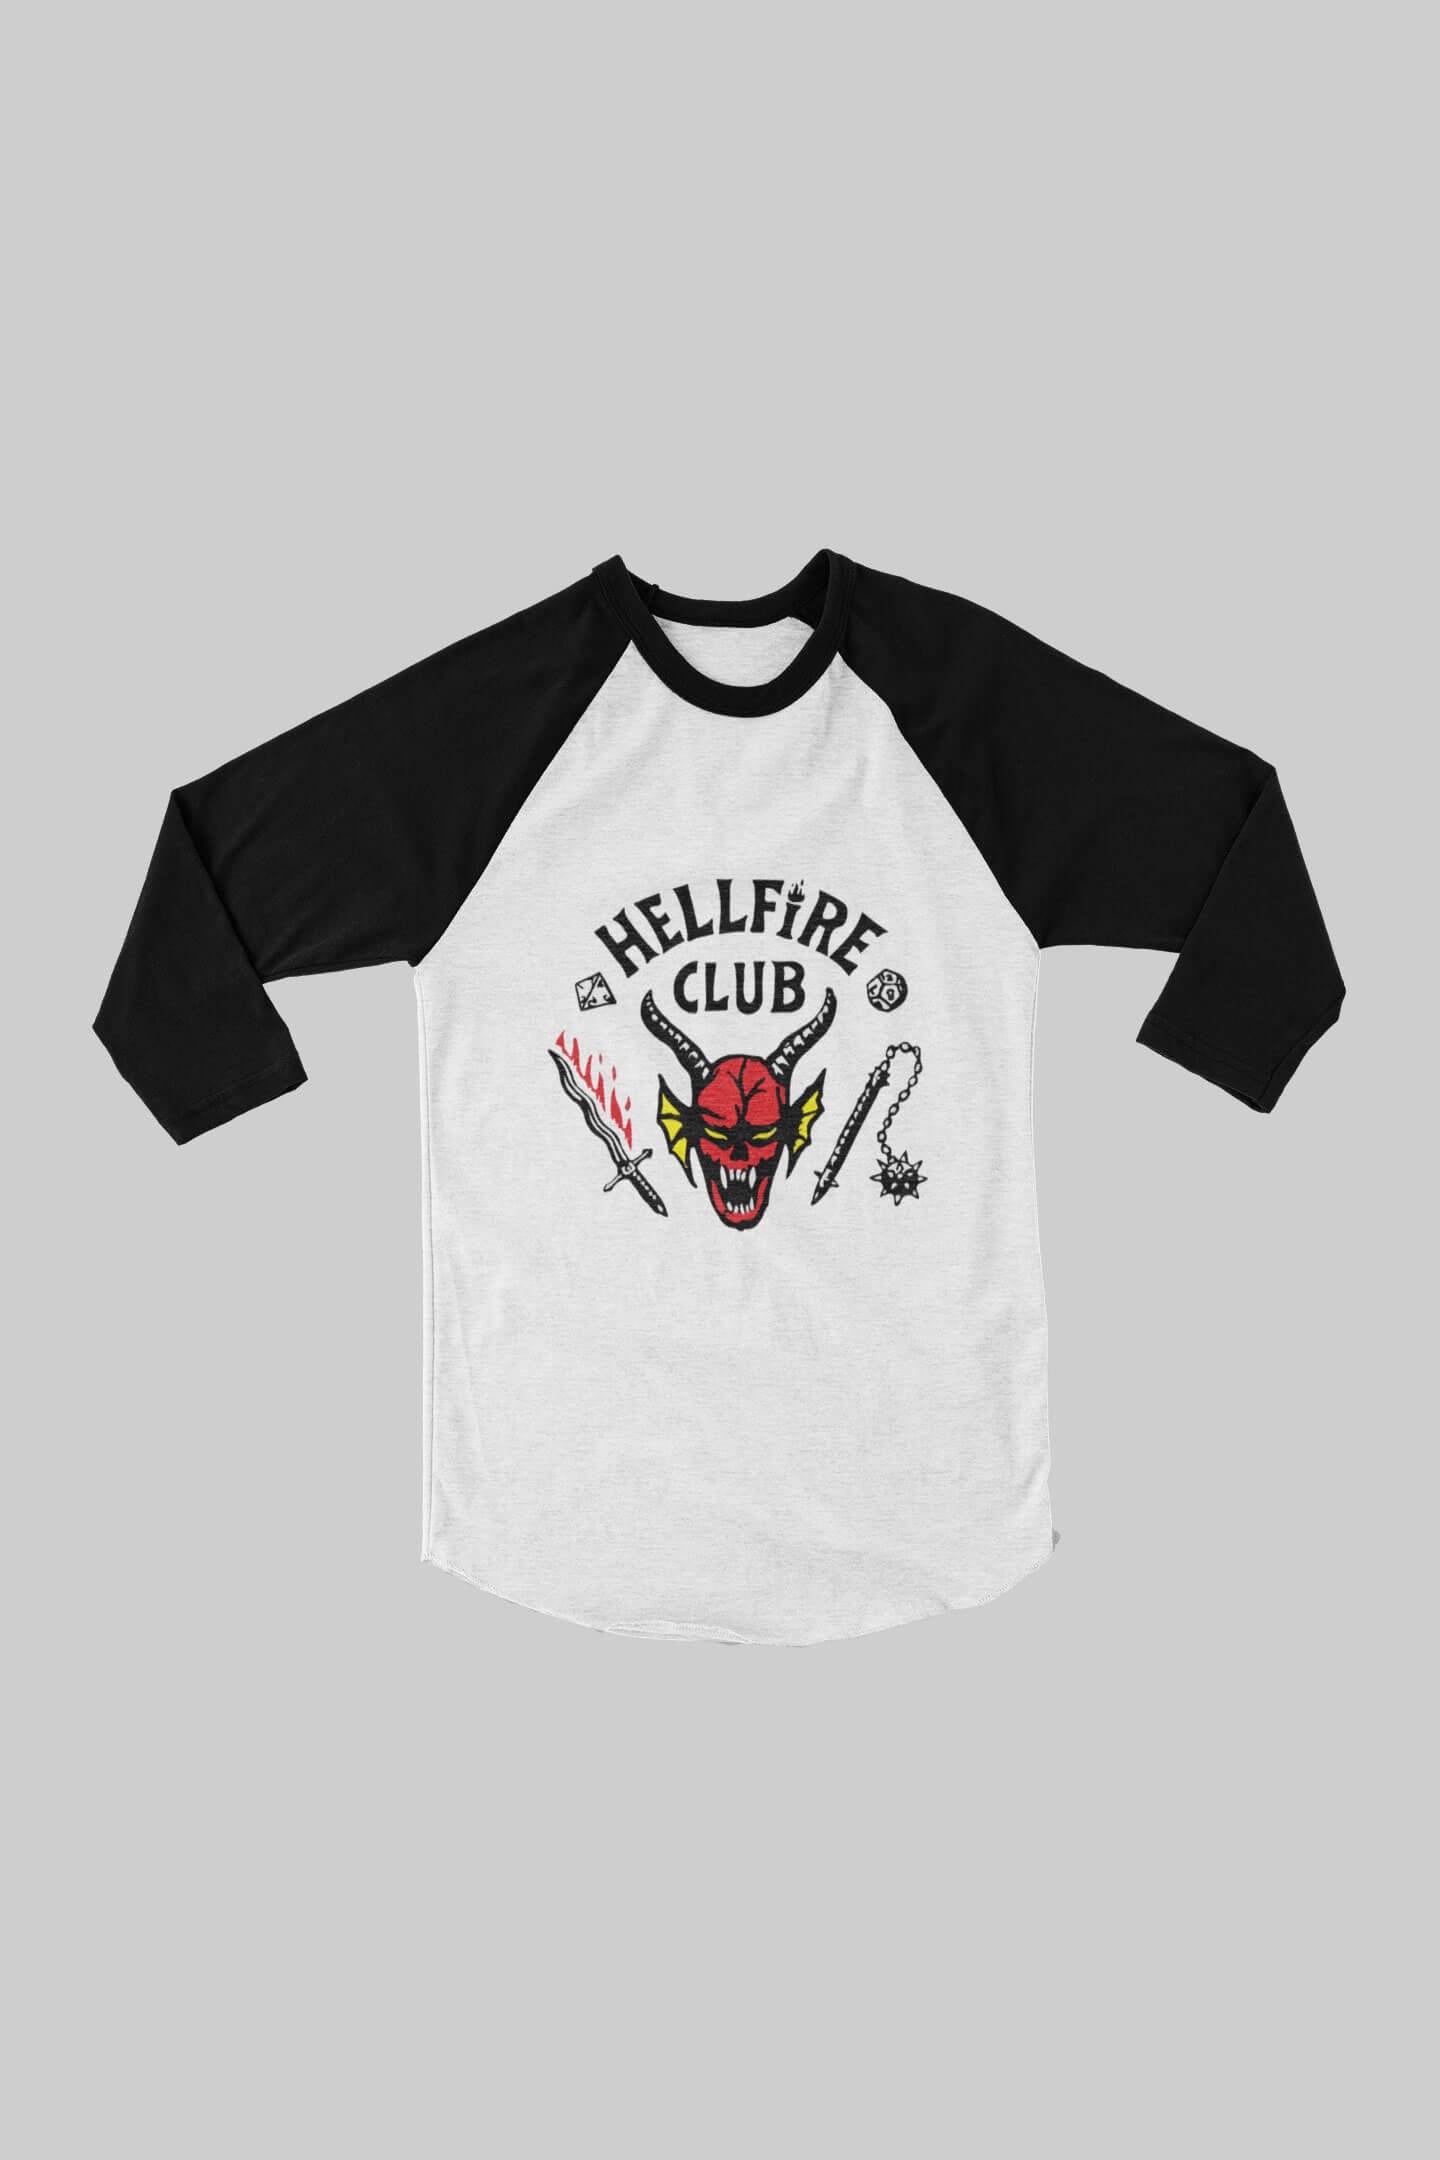 Stranger Things Hellfire Club T shirt | Available in India | Tshirtsopedia